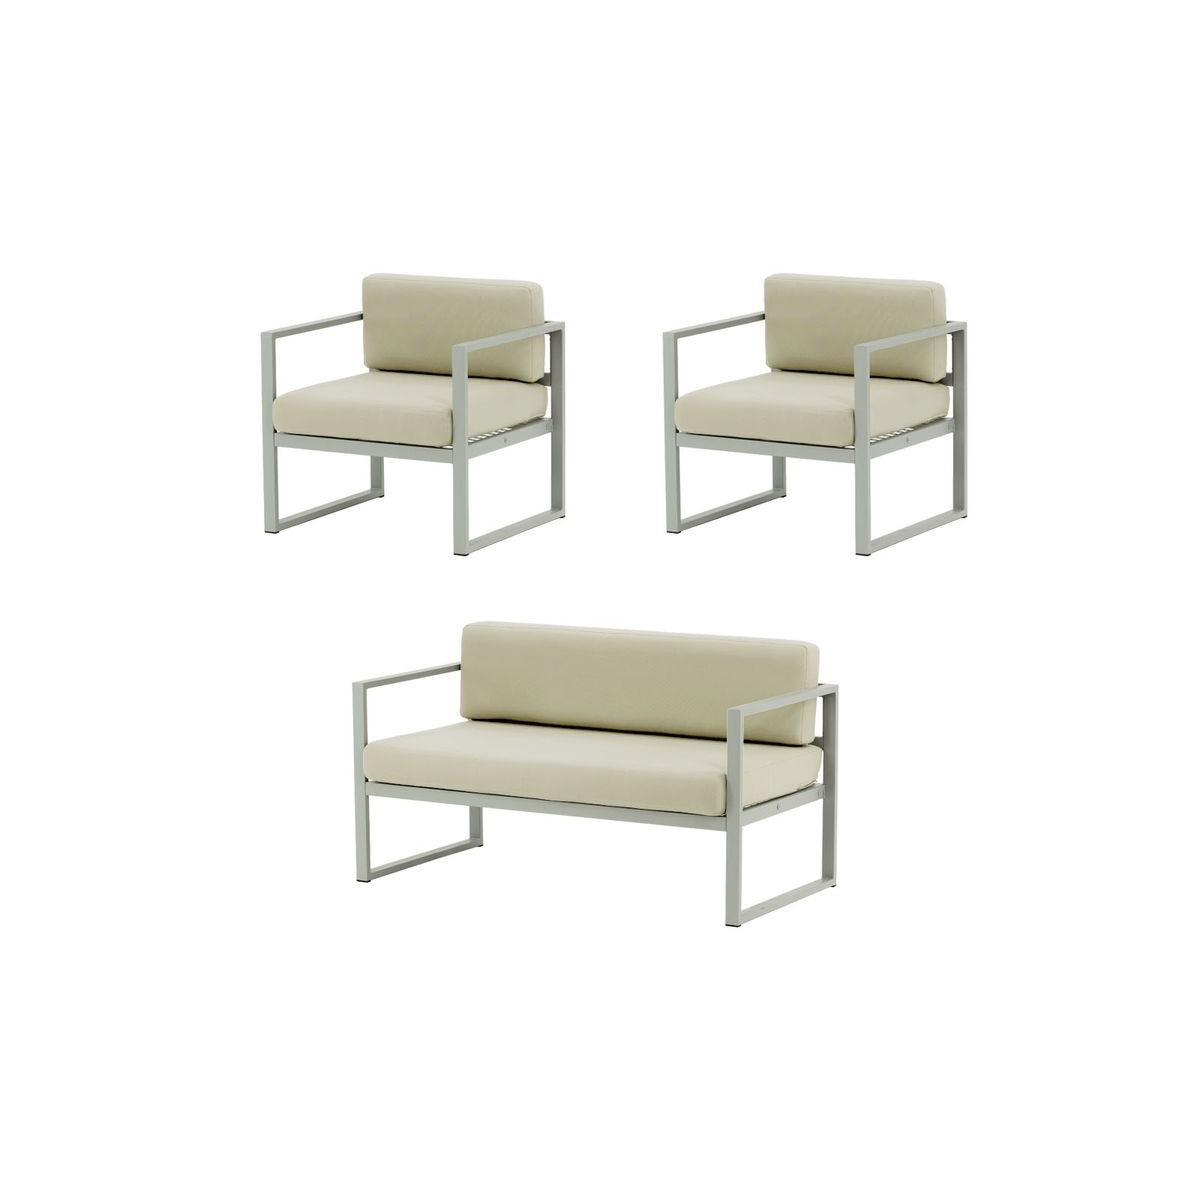 Sunset 3-piece garden furniture set A, cream, Leg colour: grey steel